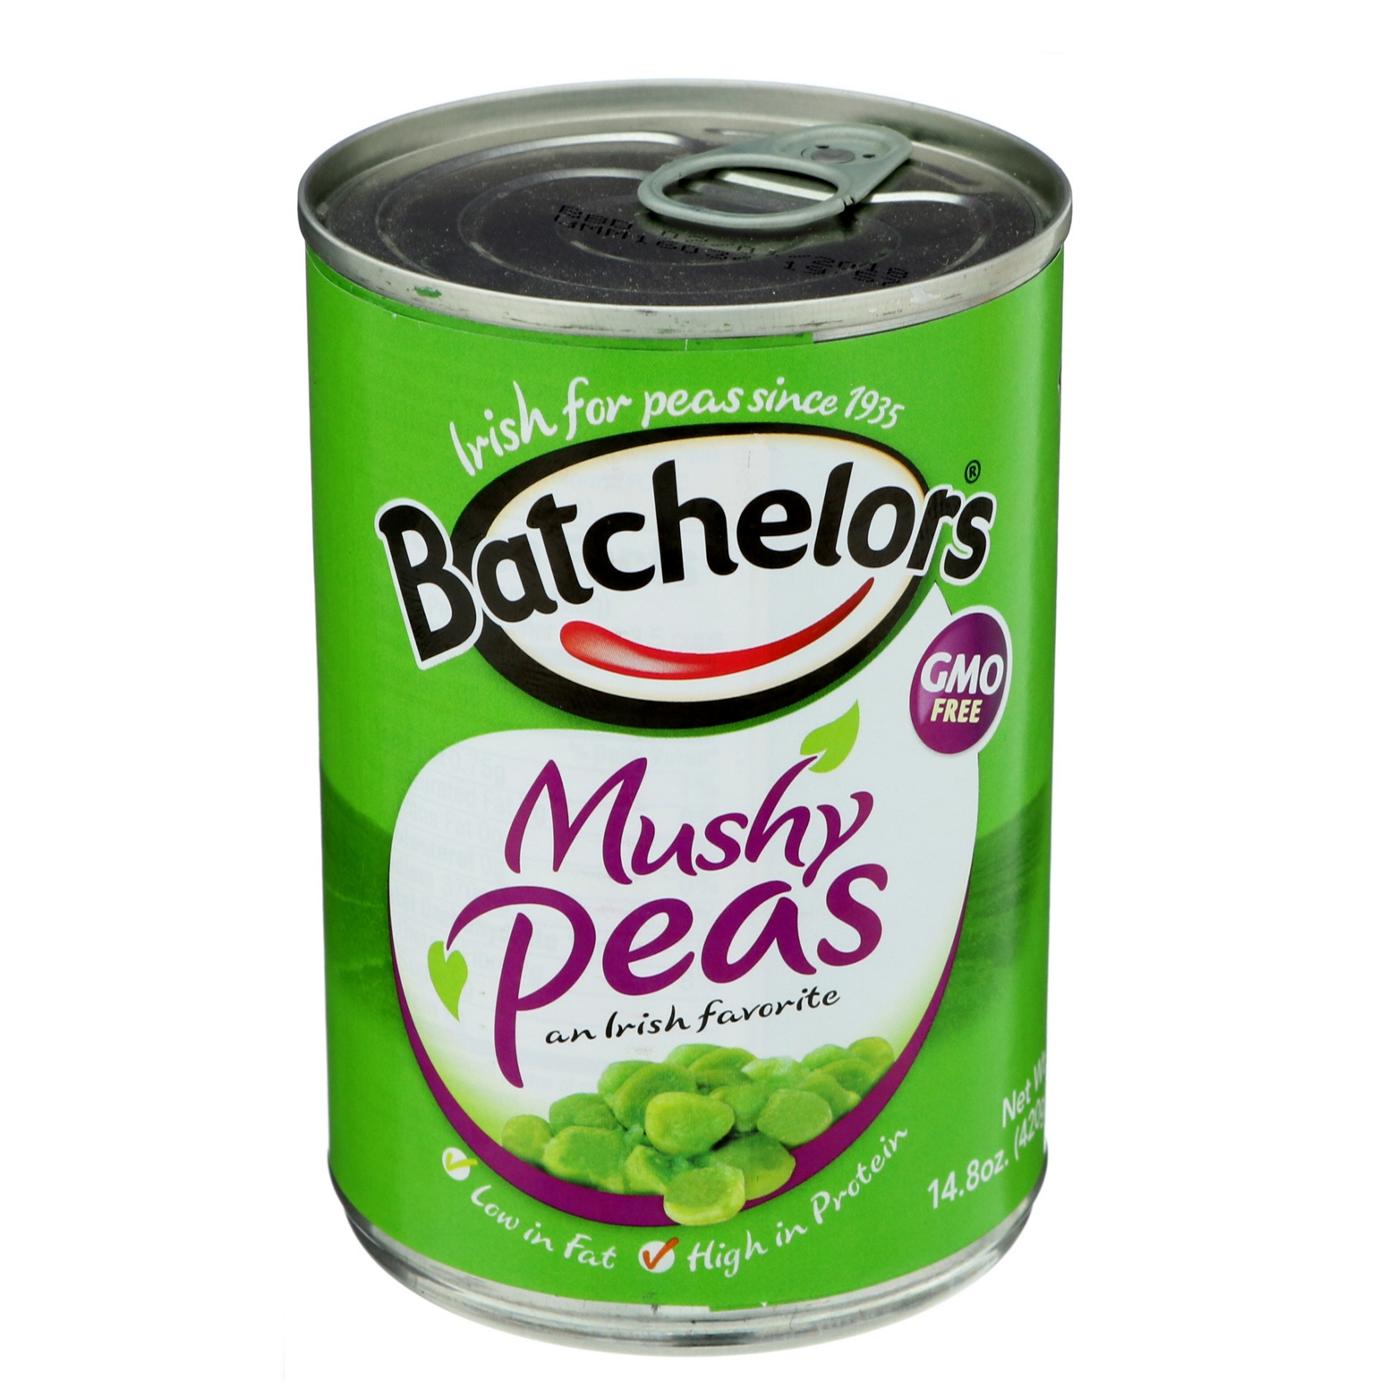 Batchelors Mushy Peas; image 1 of 2